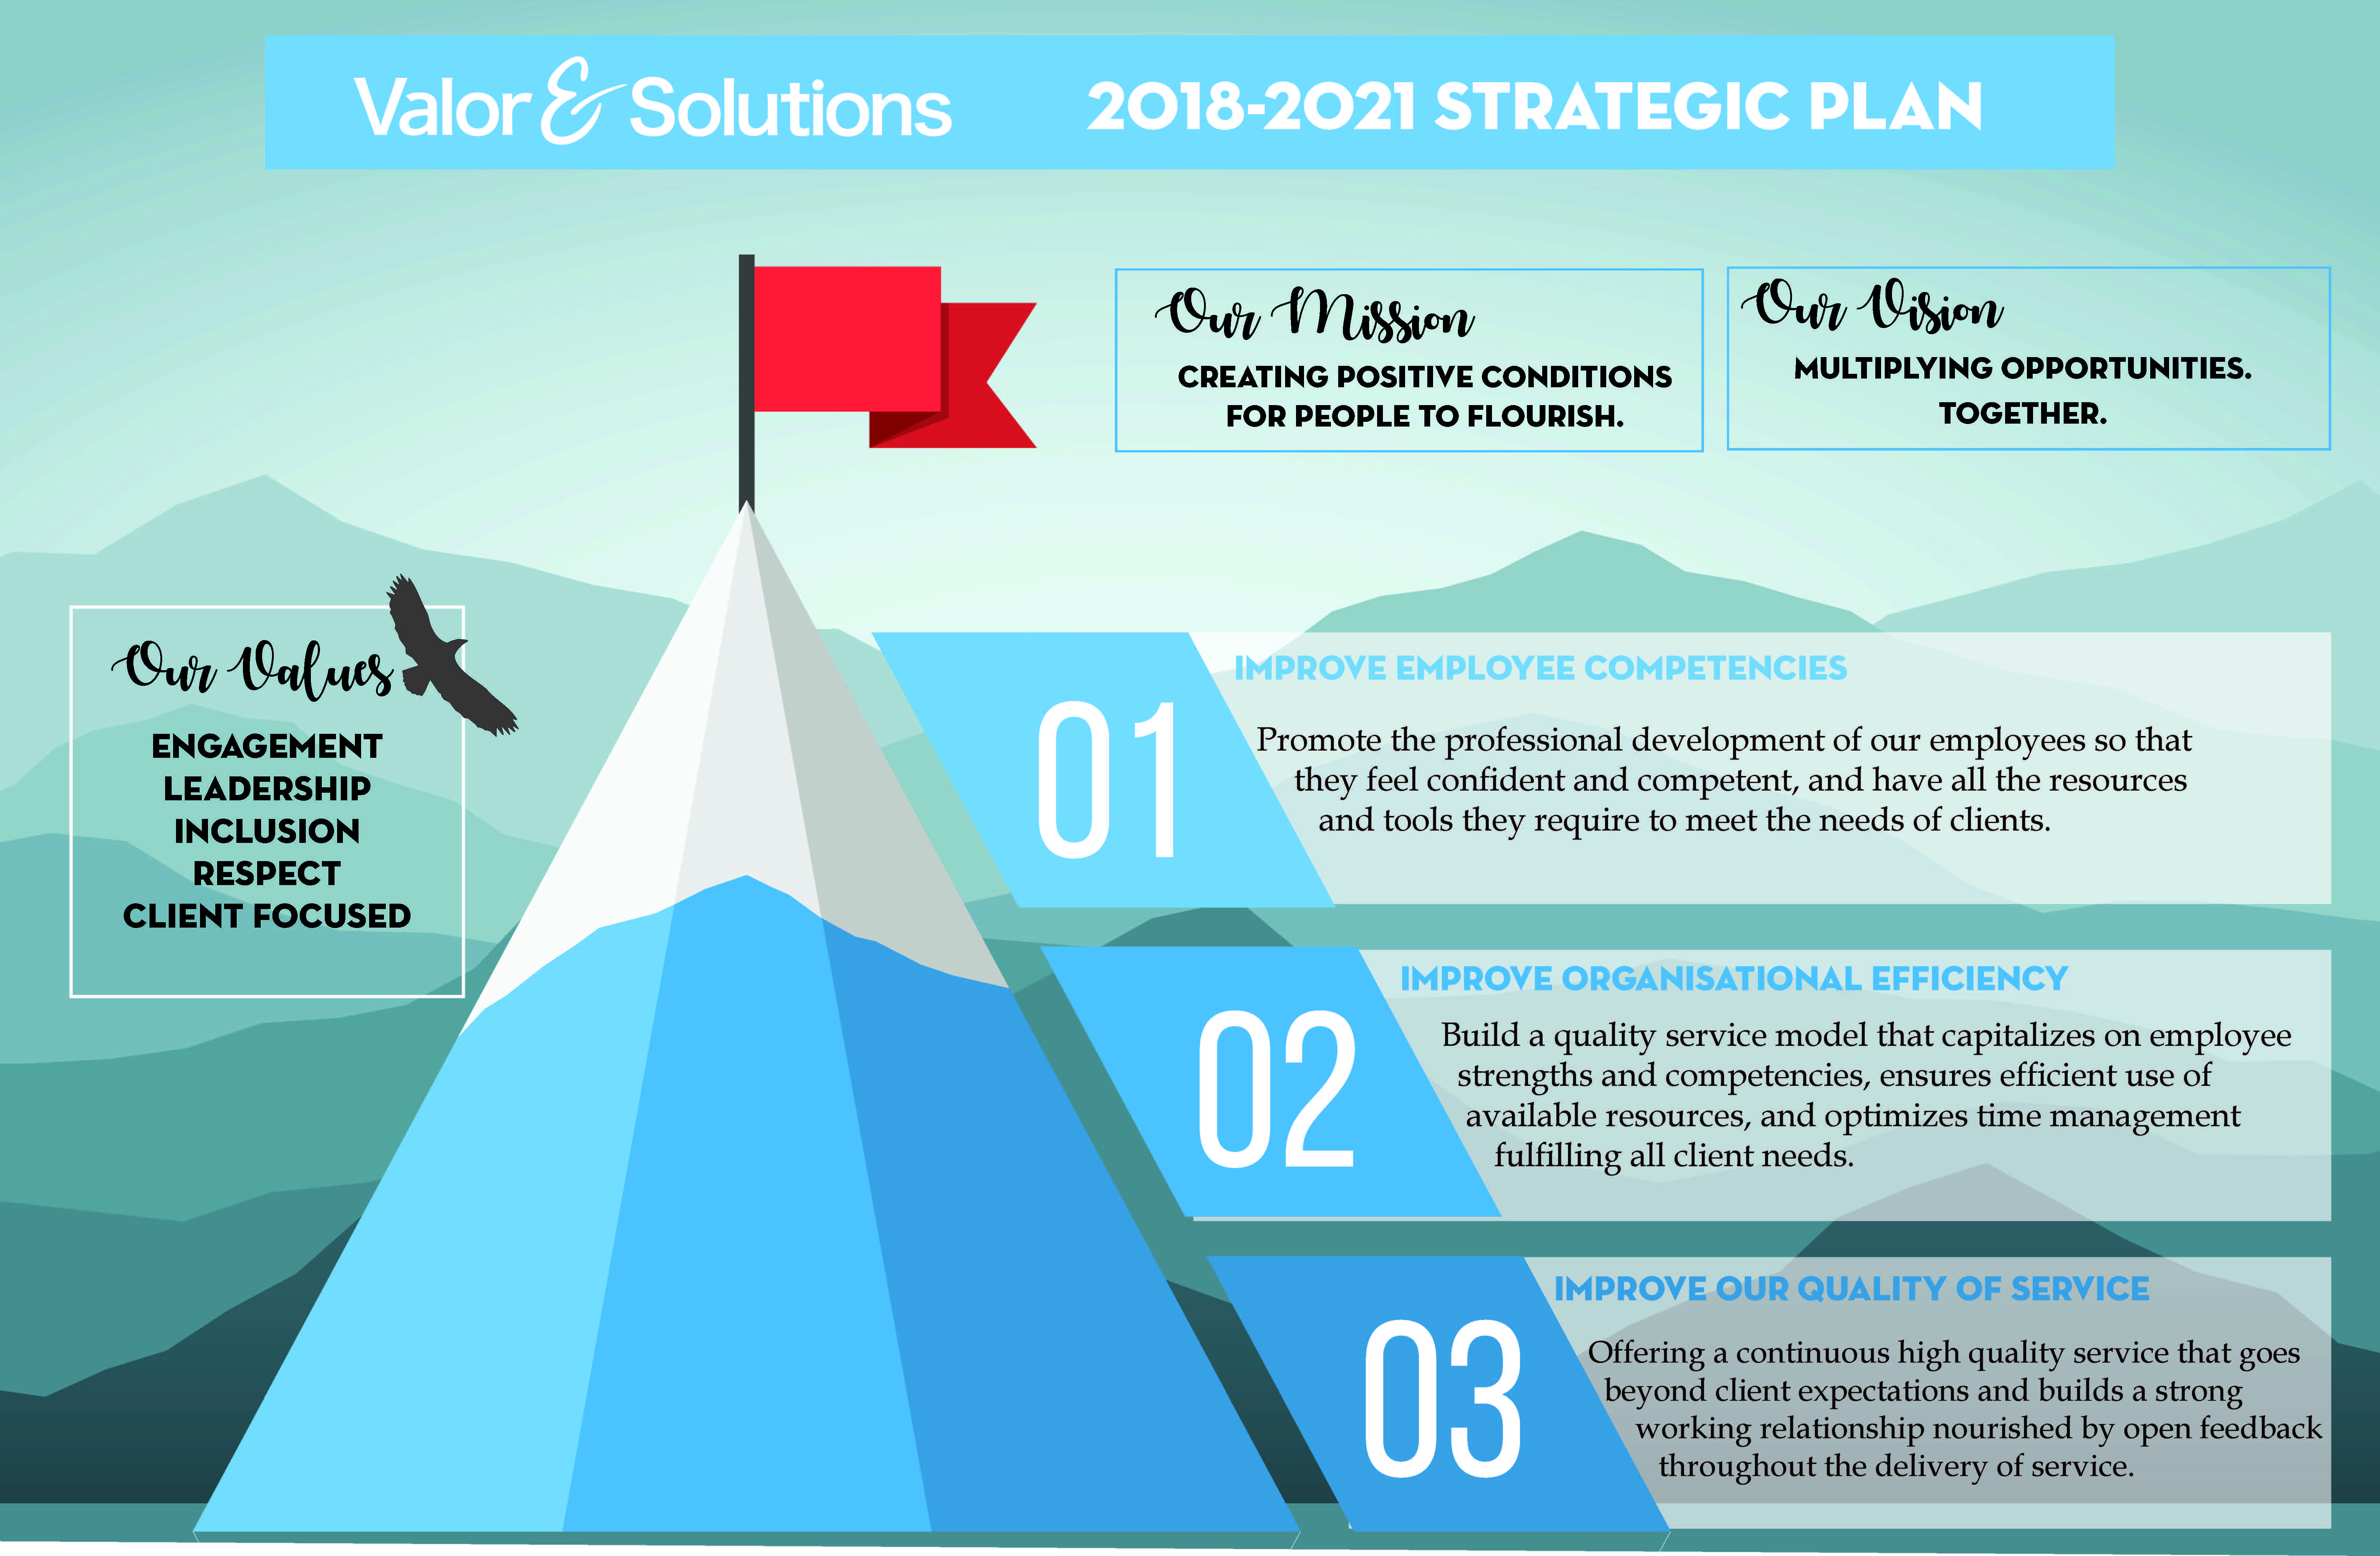 Strategic Plan 2018-2021 of Valor & Solutions.